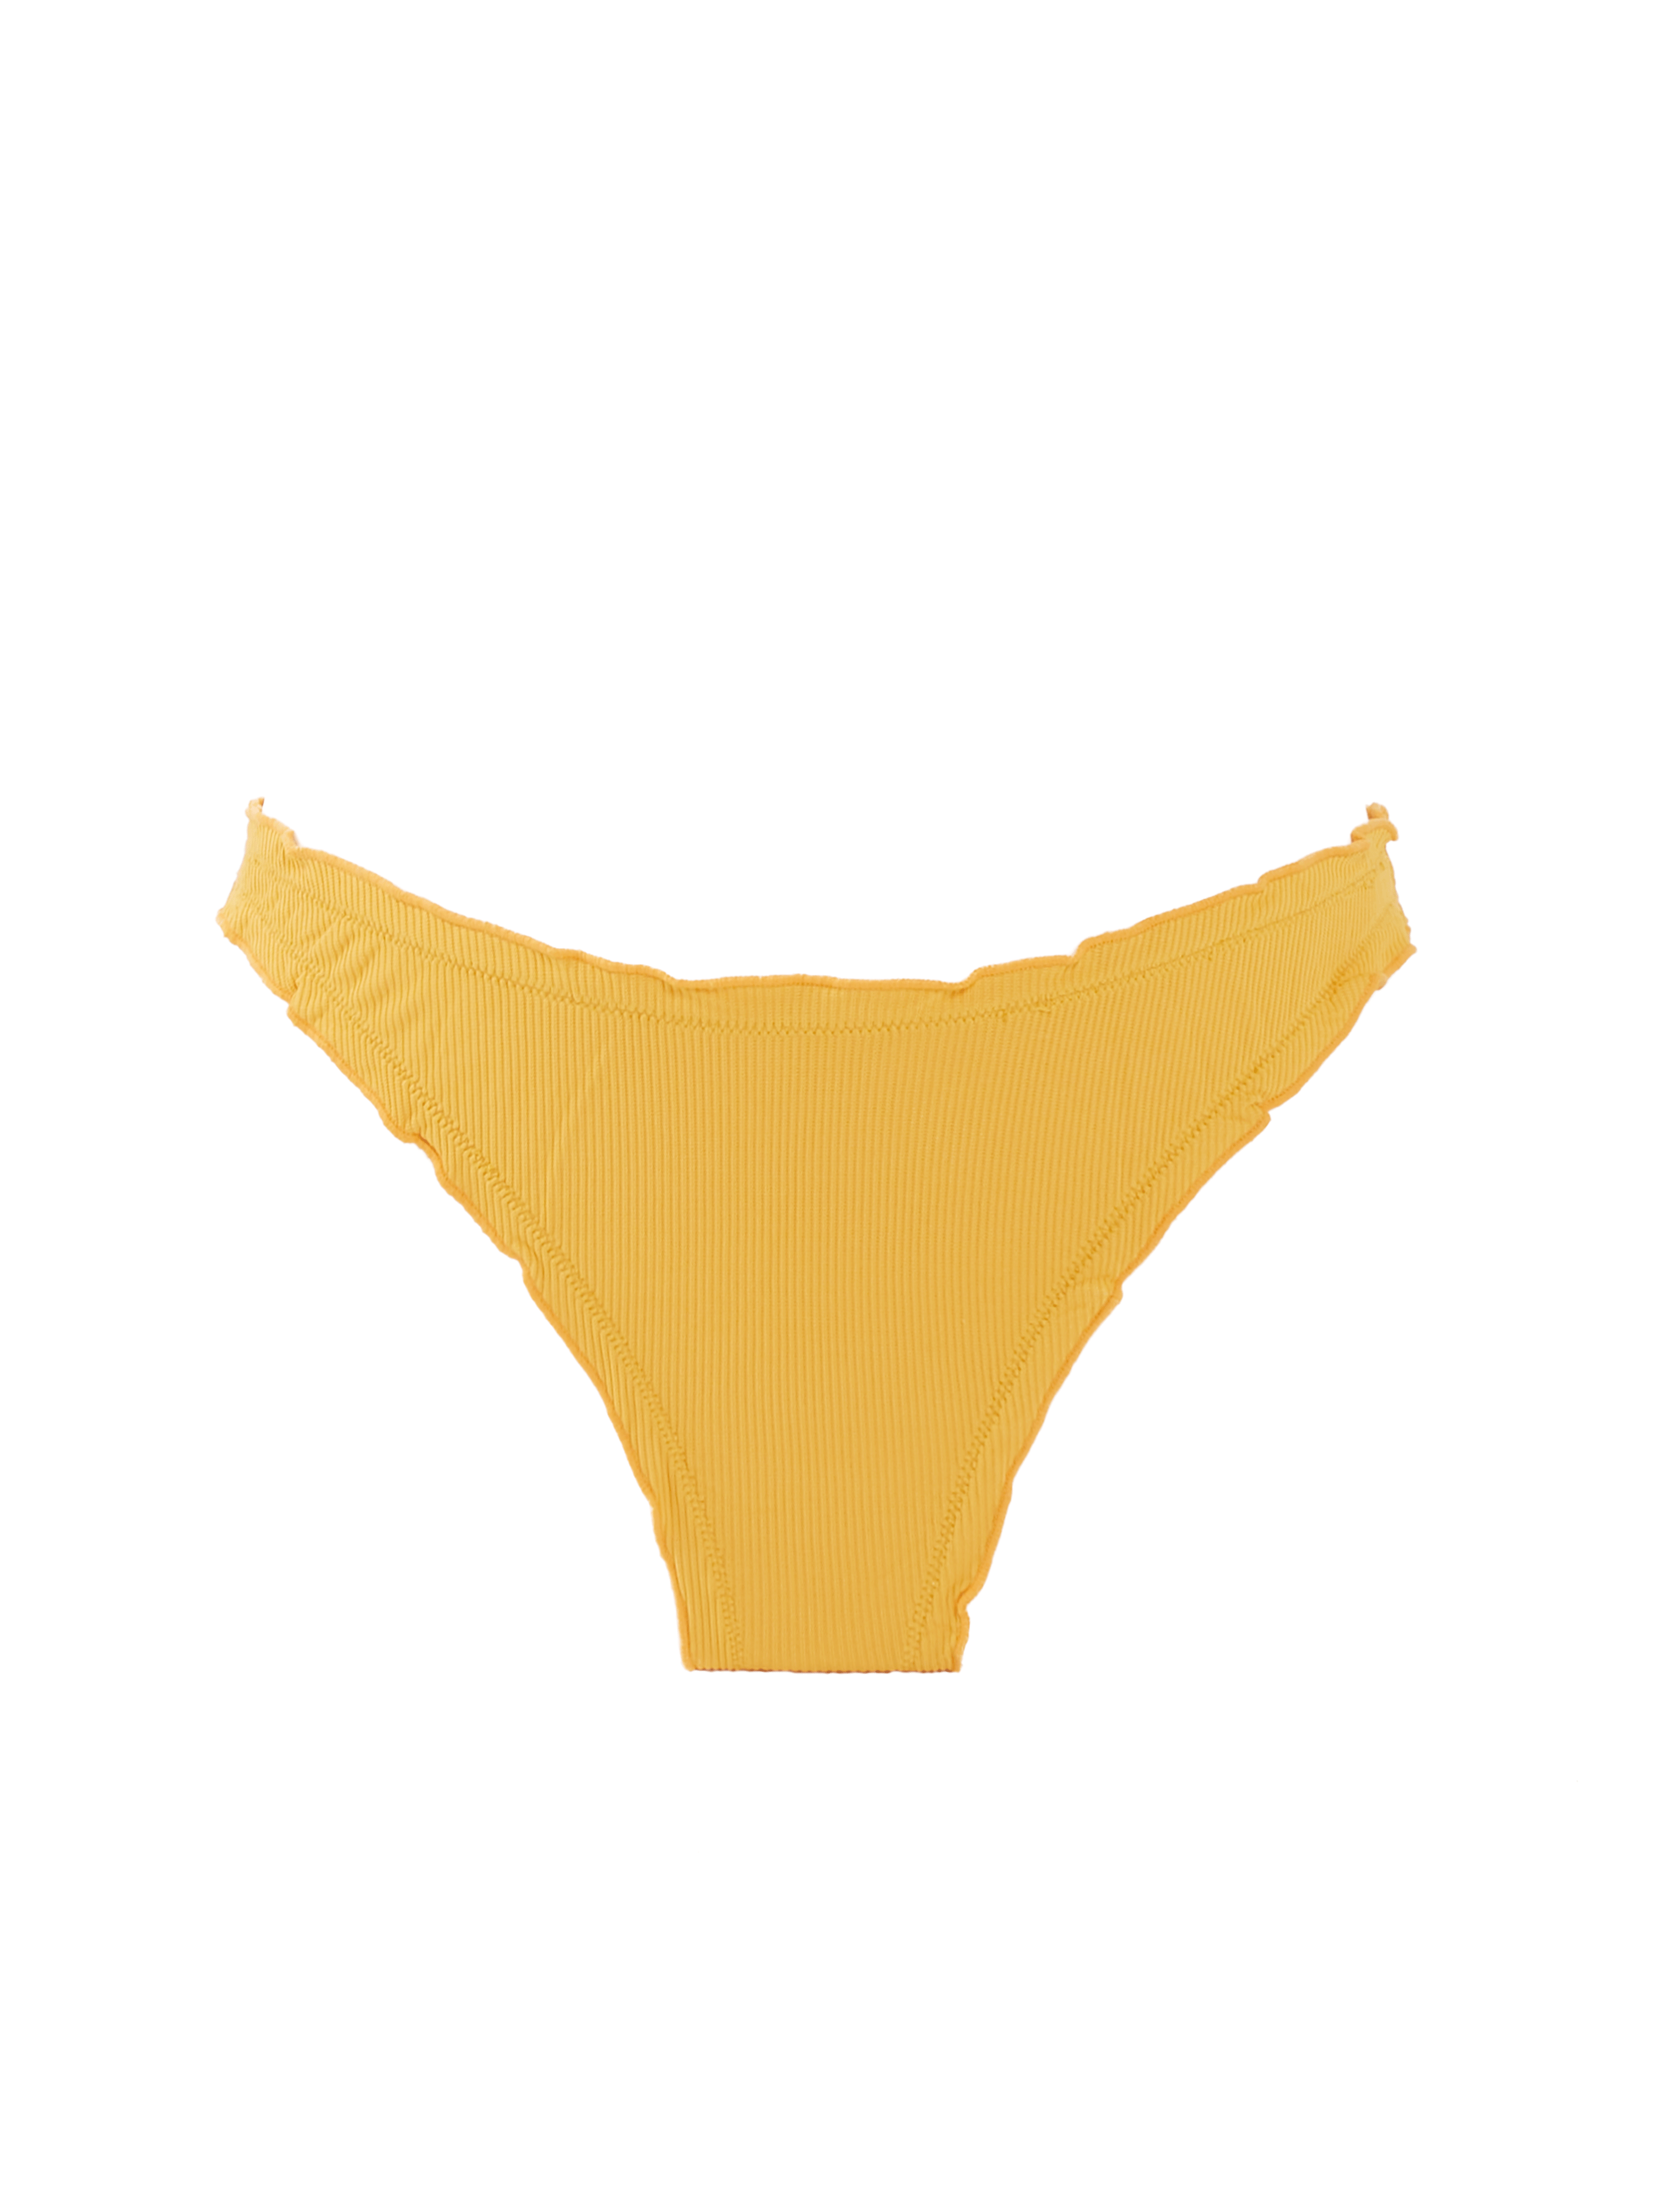 Produktbild Bikini Unterteil gelb gerippt Palmar Swimwear